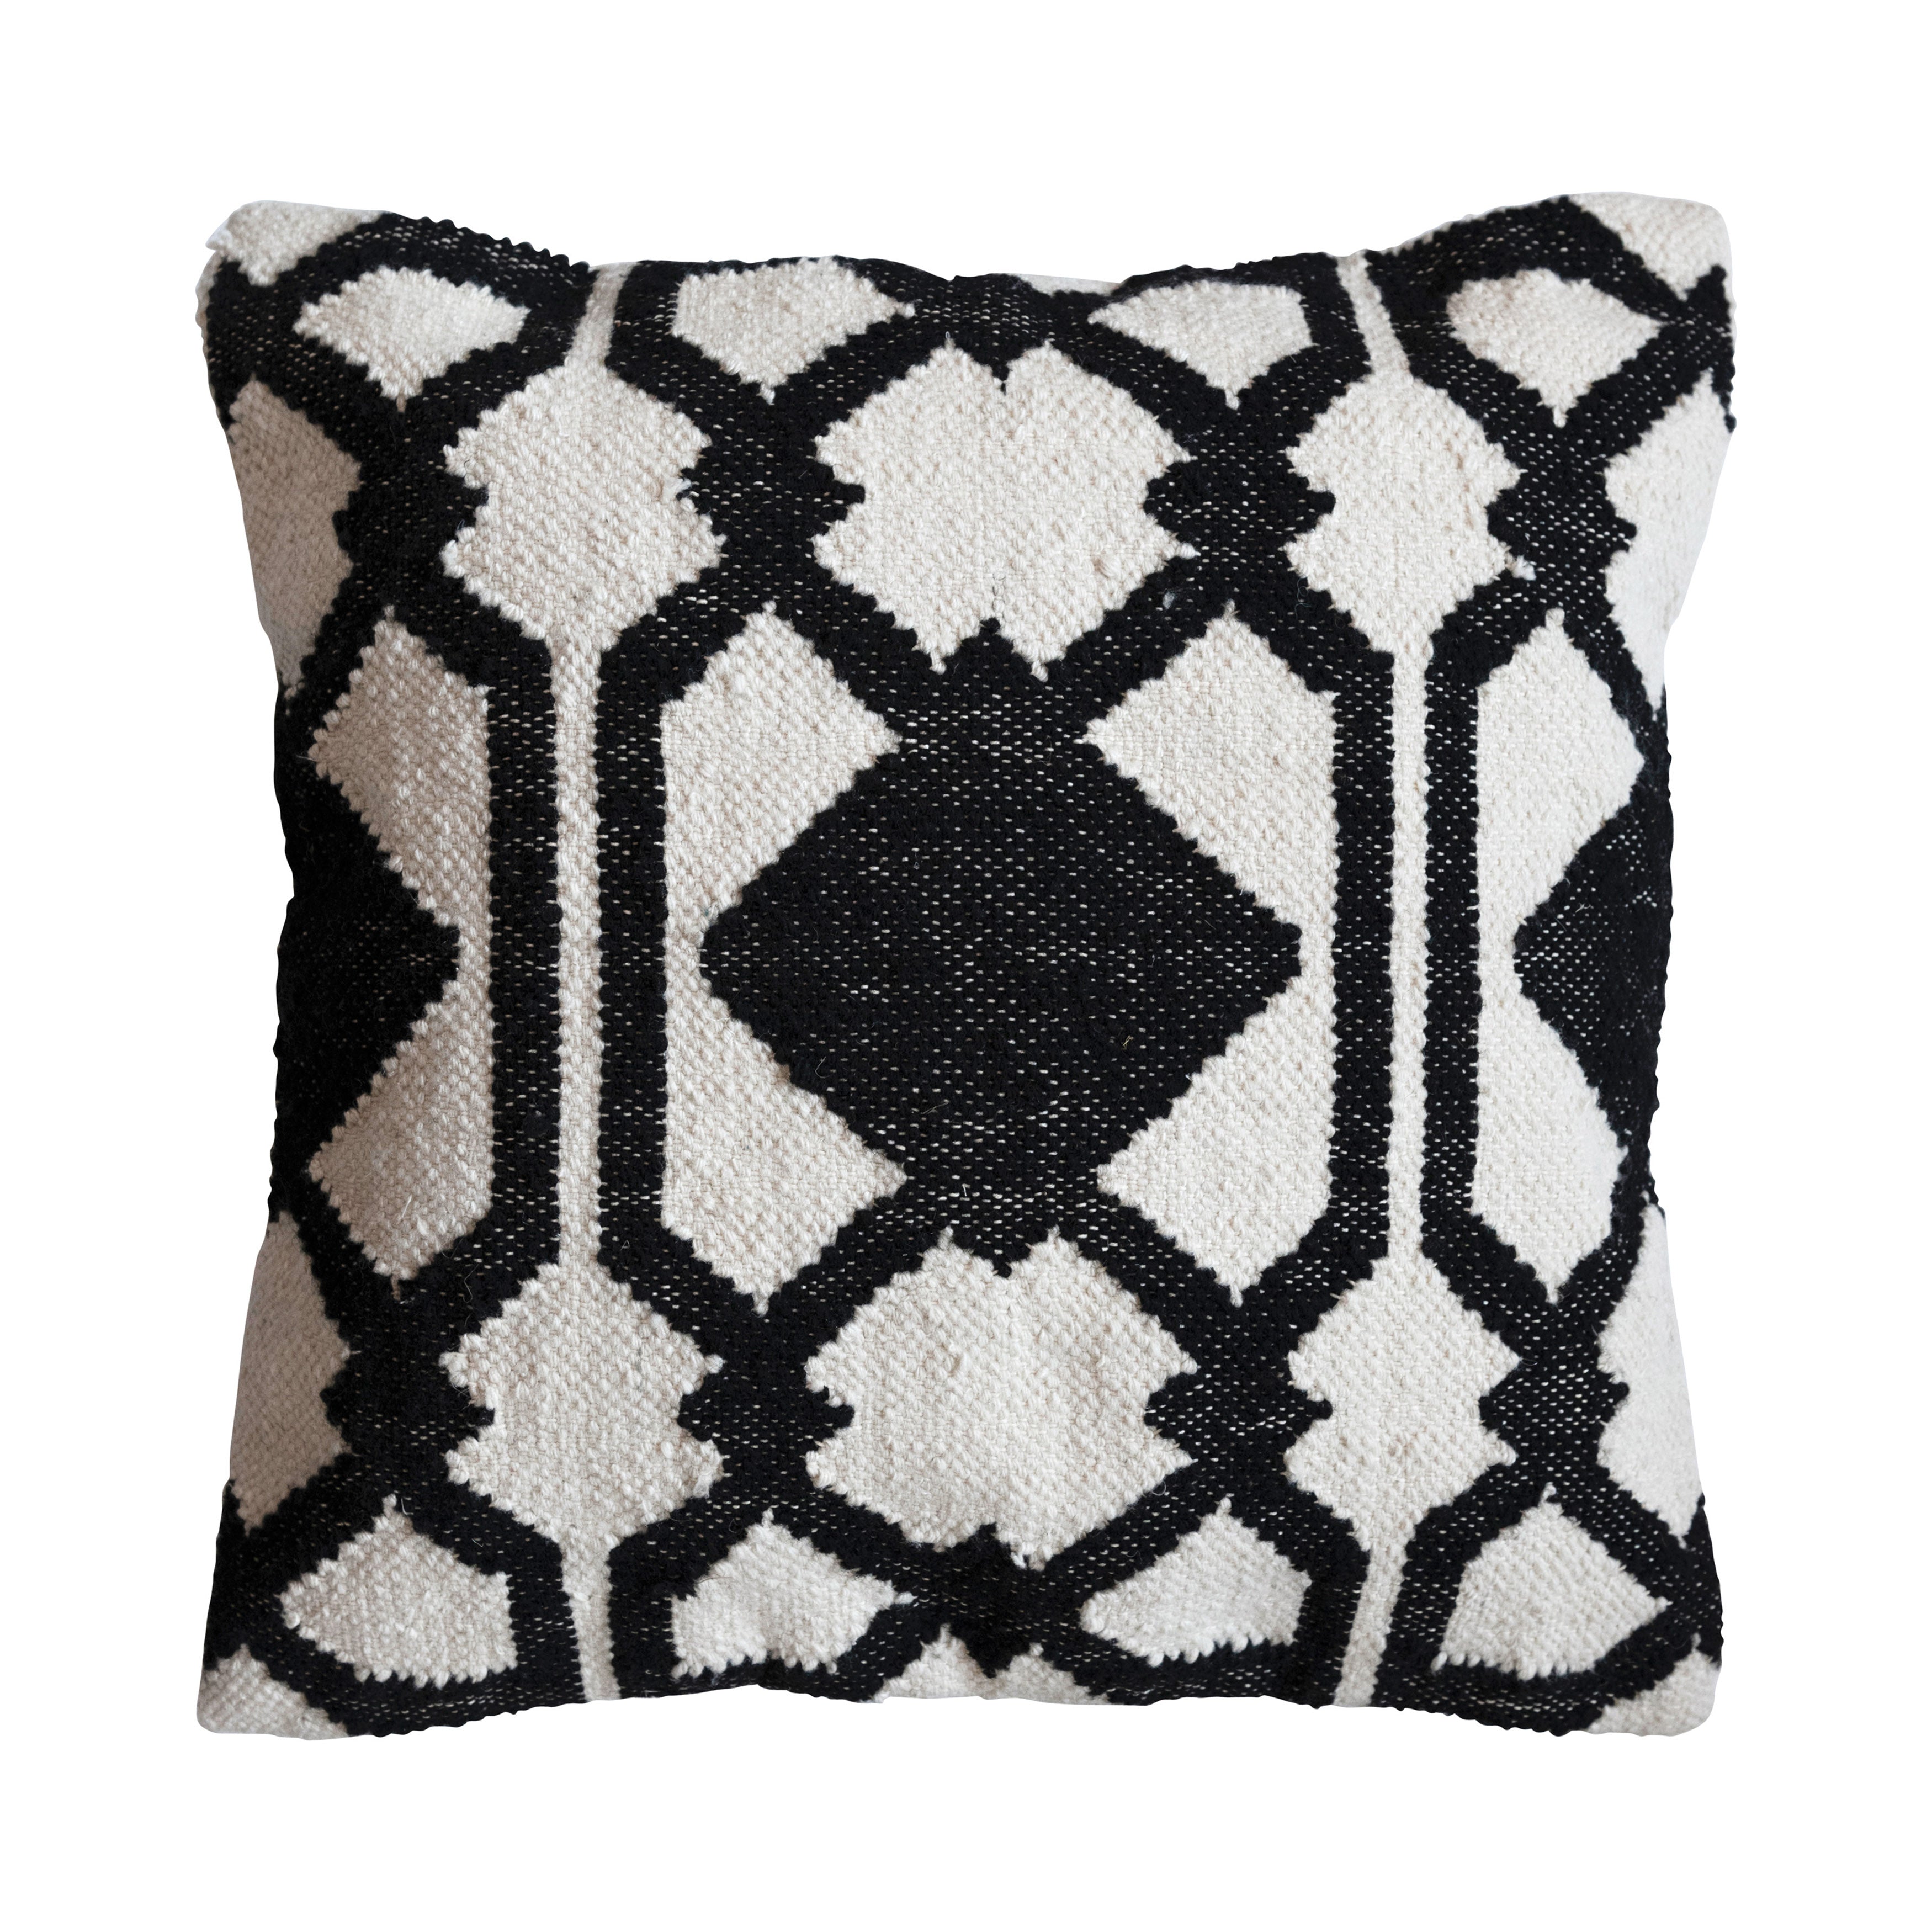 20" Square Woven Wool & Cotton Pillow w/ Pattern, Black & Cream Color